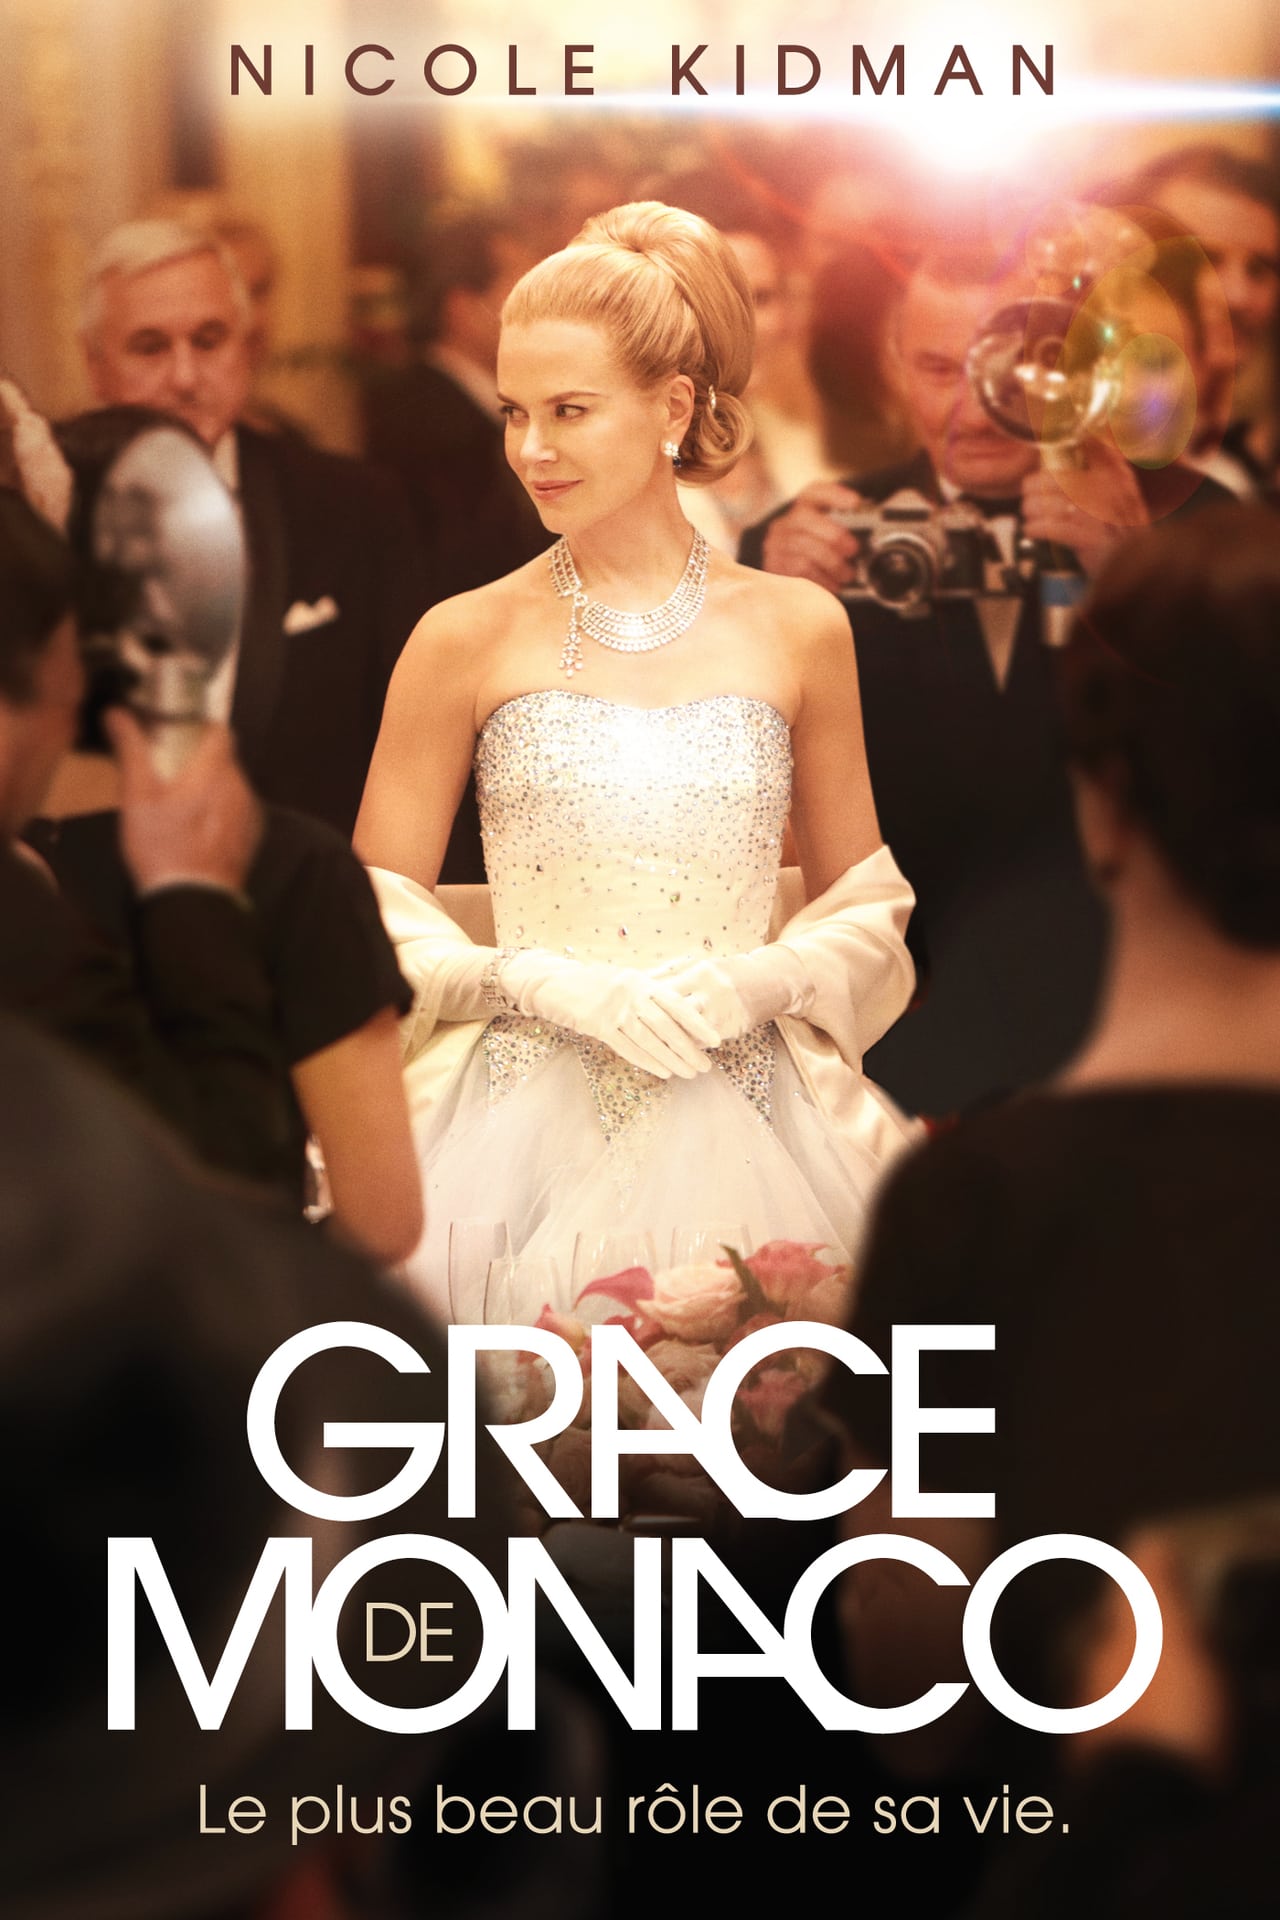 Grace - Monaco csillaga